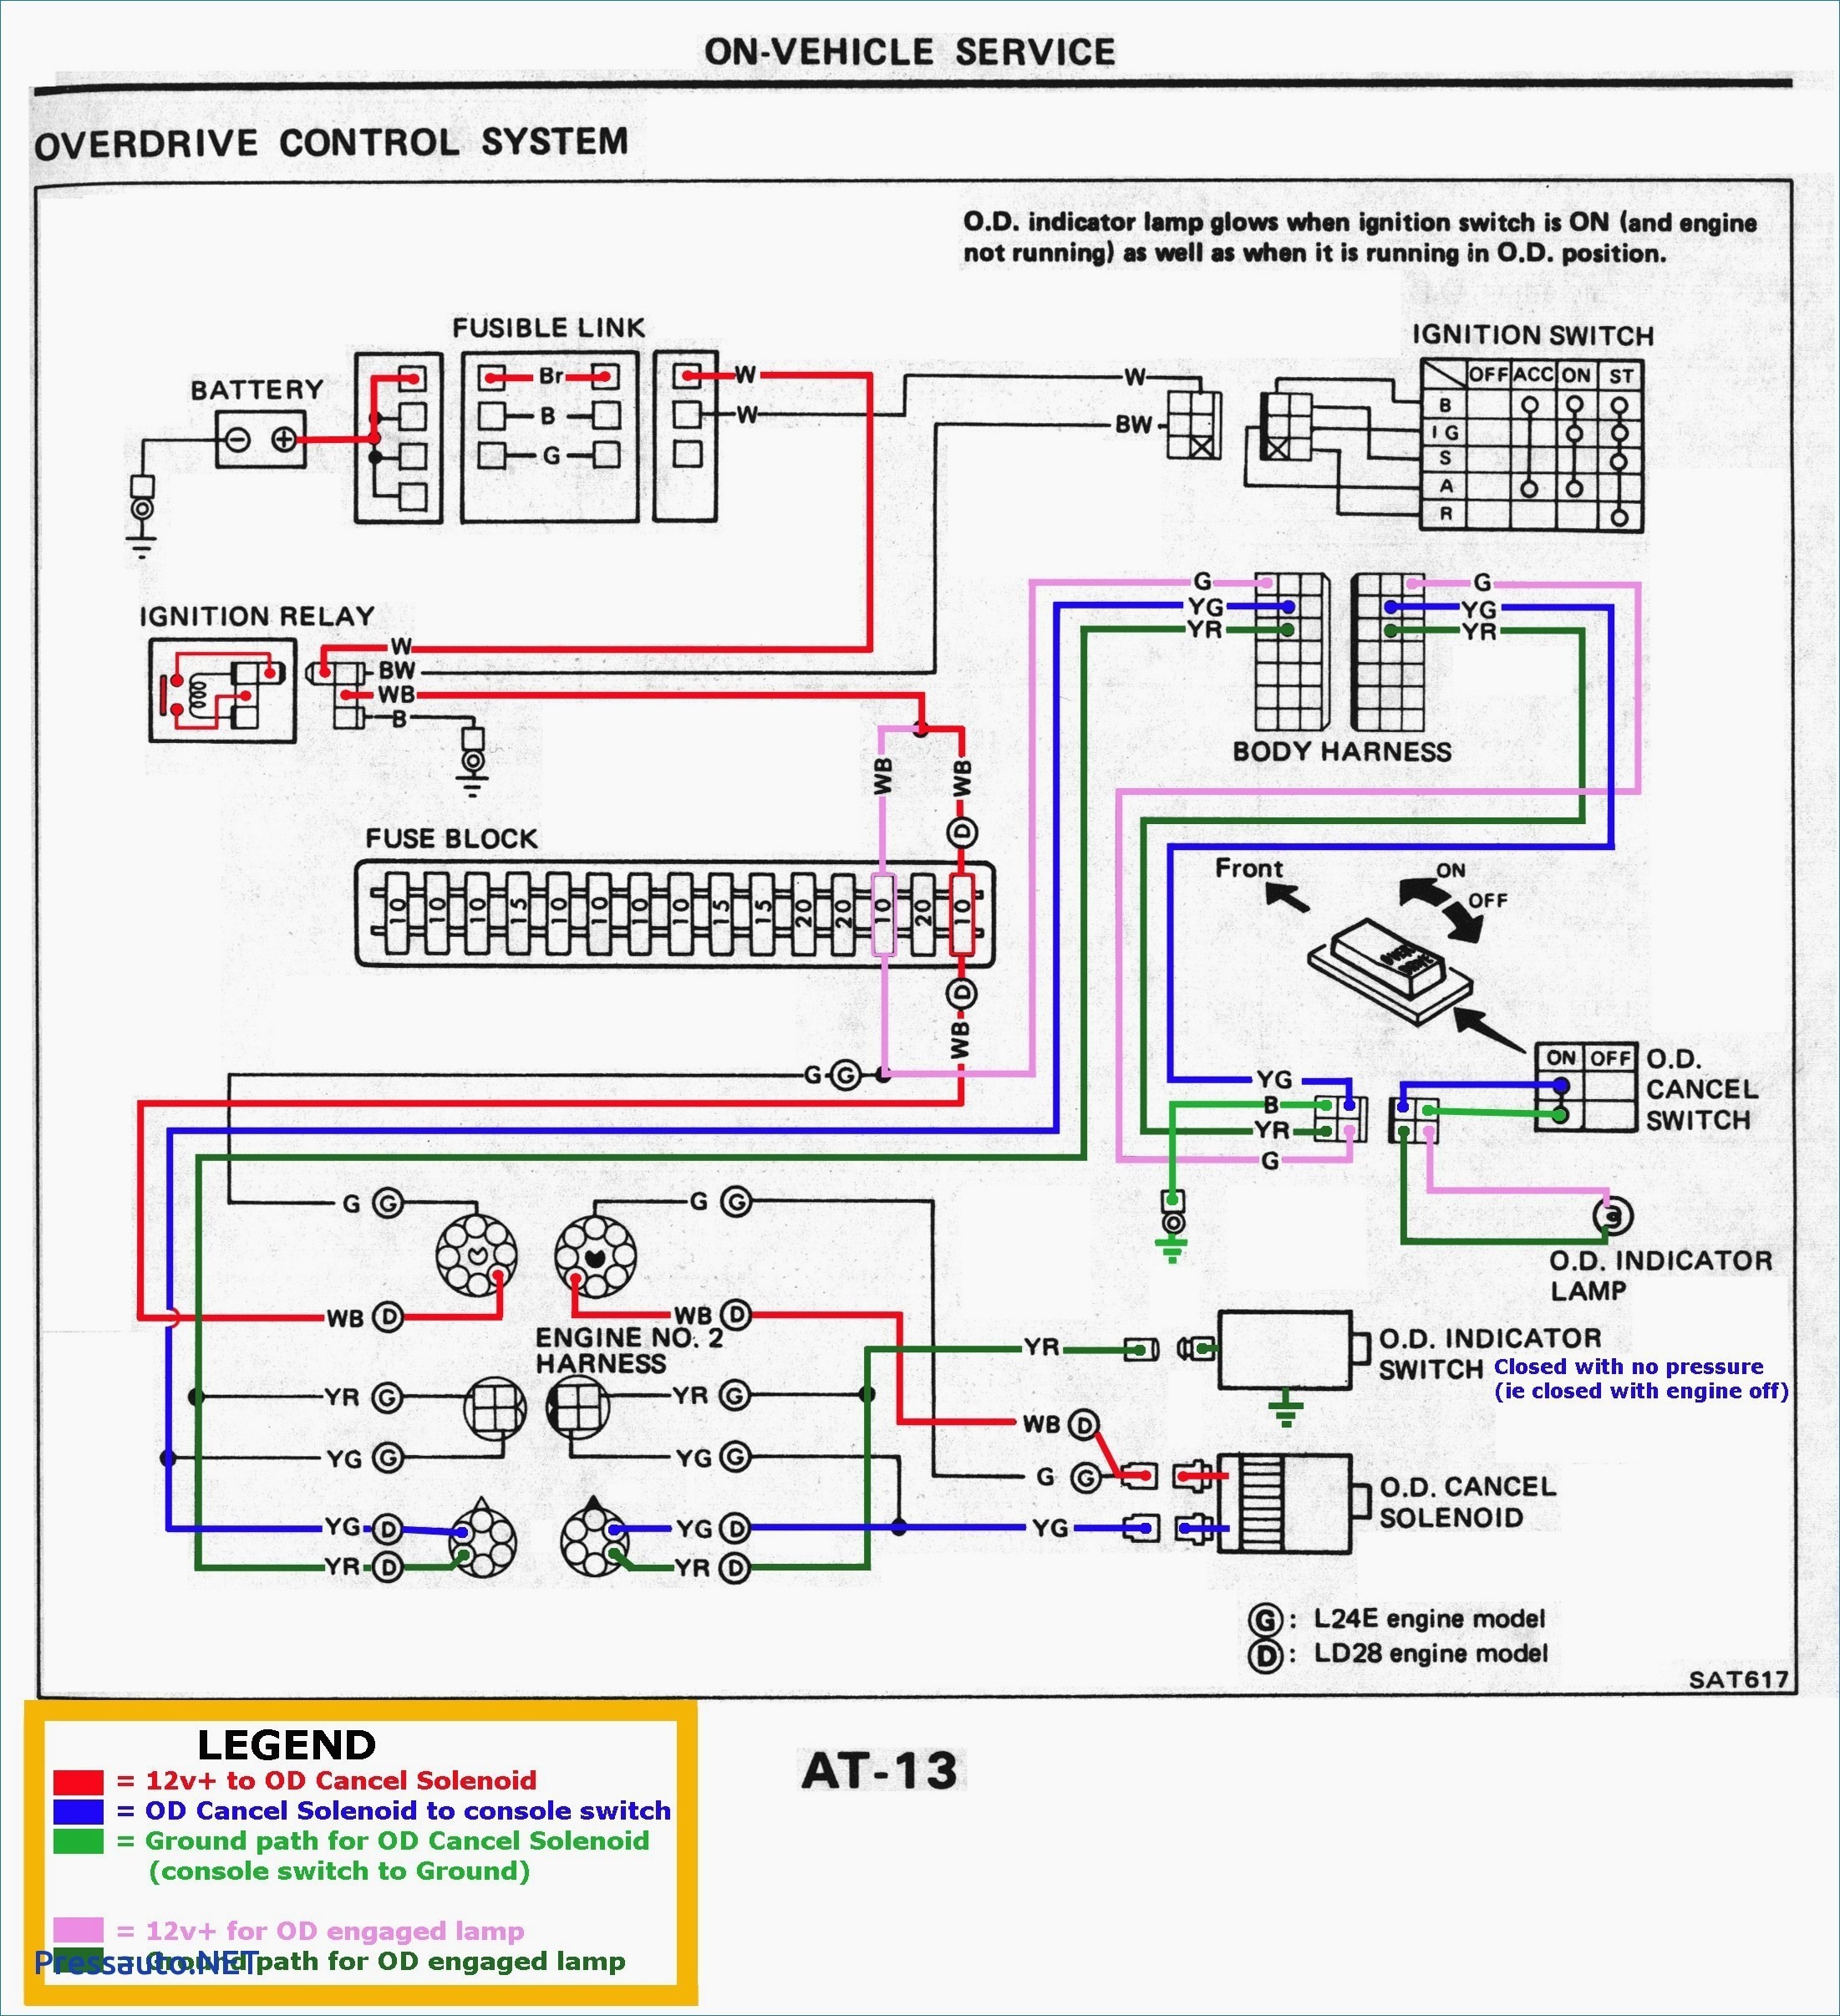 1997 subaru legacy wiring diagram Lovely 1997 Subaru Legacy Wiring Diagram 2018 Subaru Wiring Diagram Color